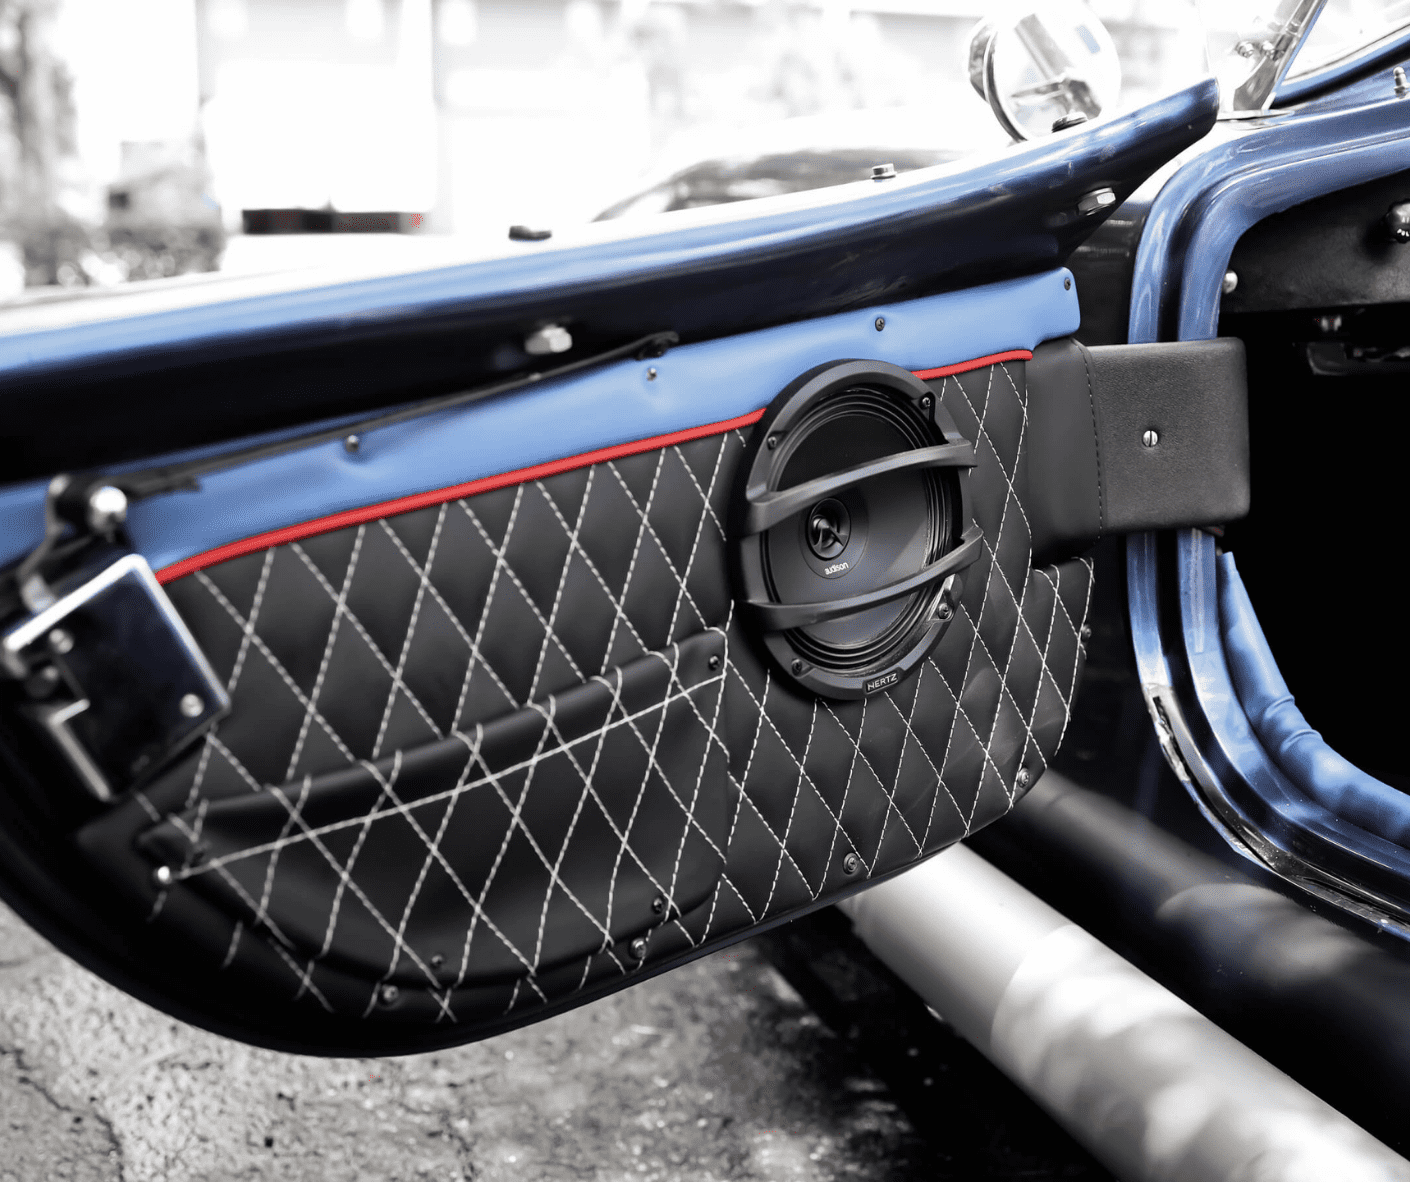 Door panel reupholstery on Shelby Cobra